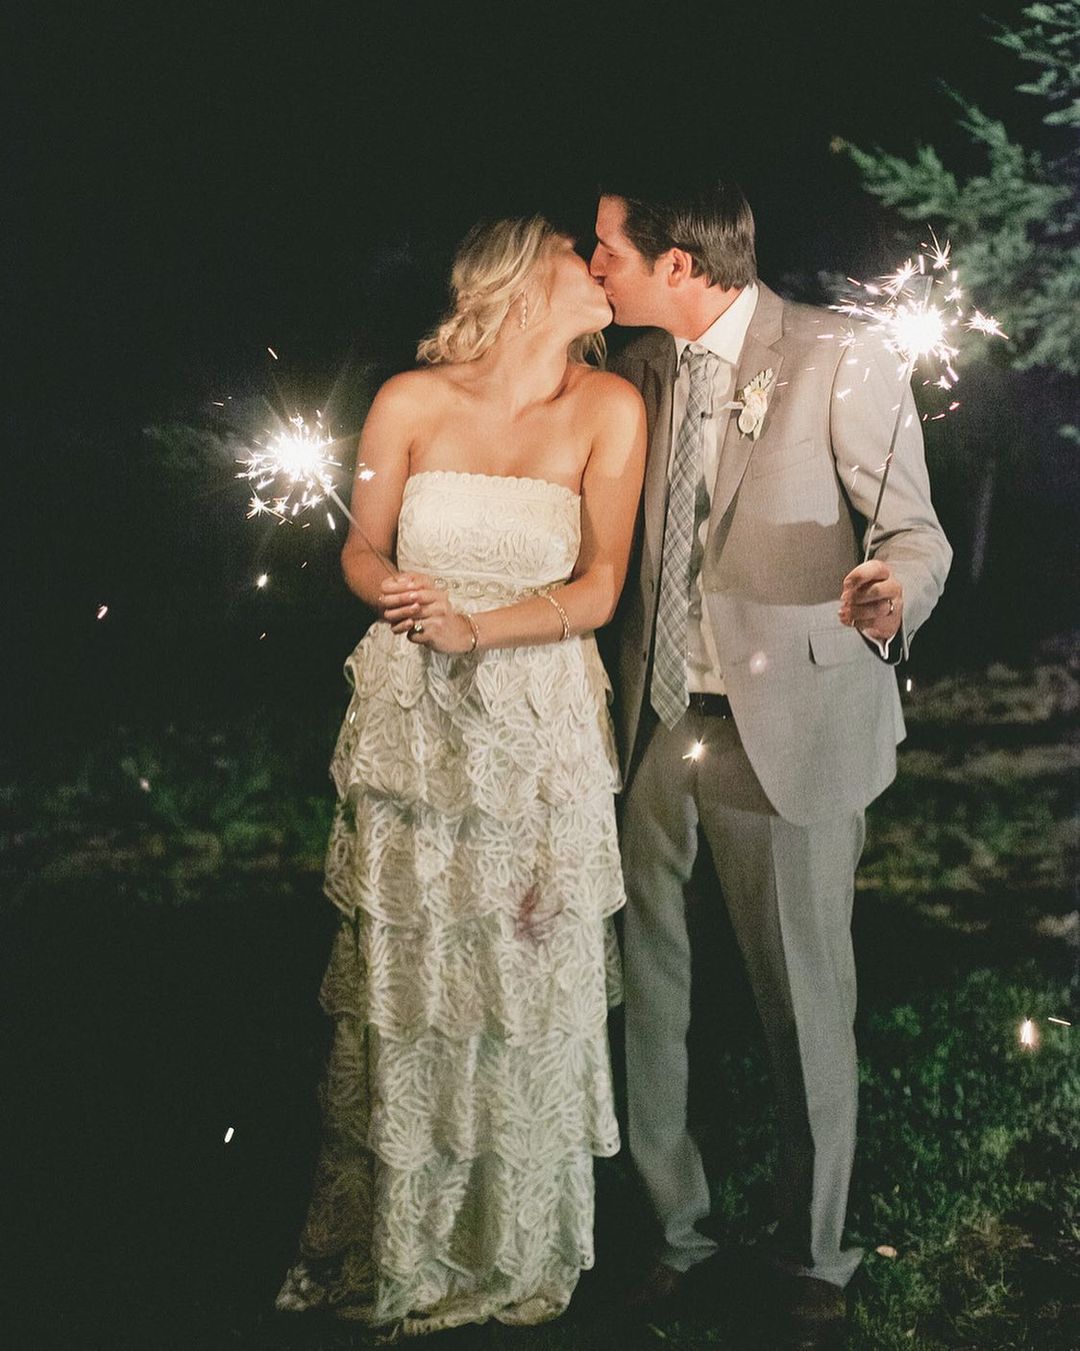 wedding kiss photos couple with sparklers myonelove